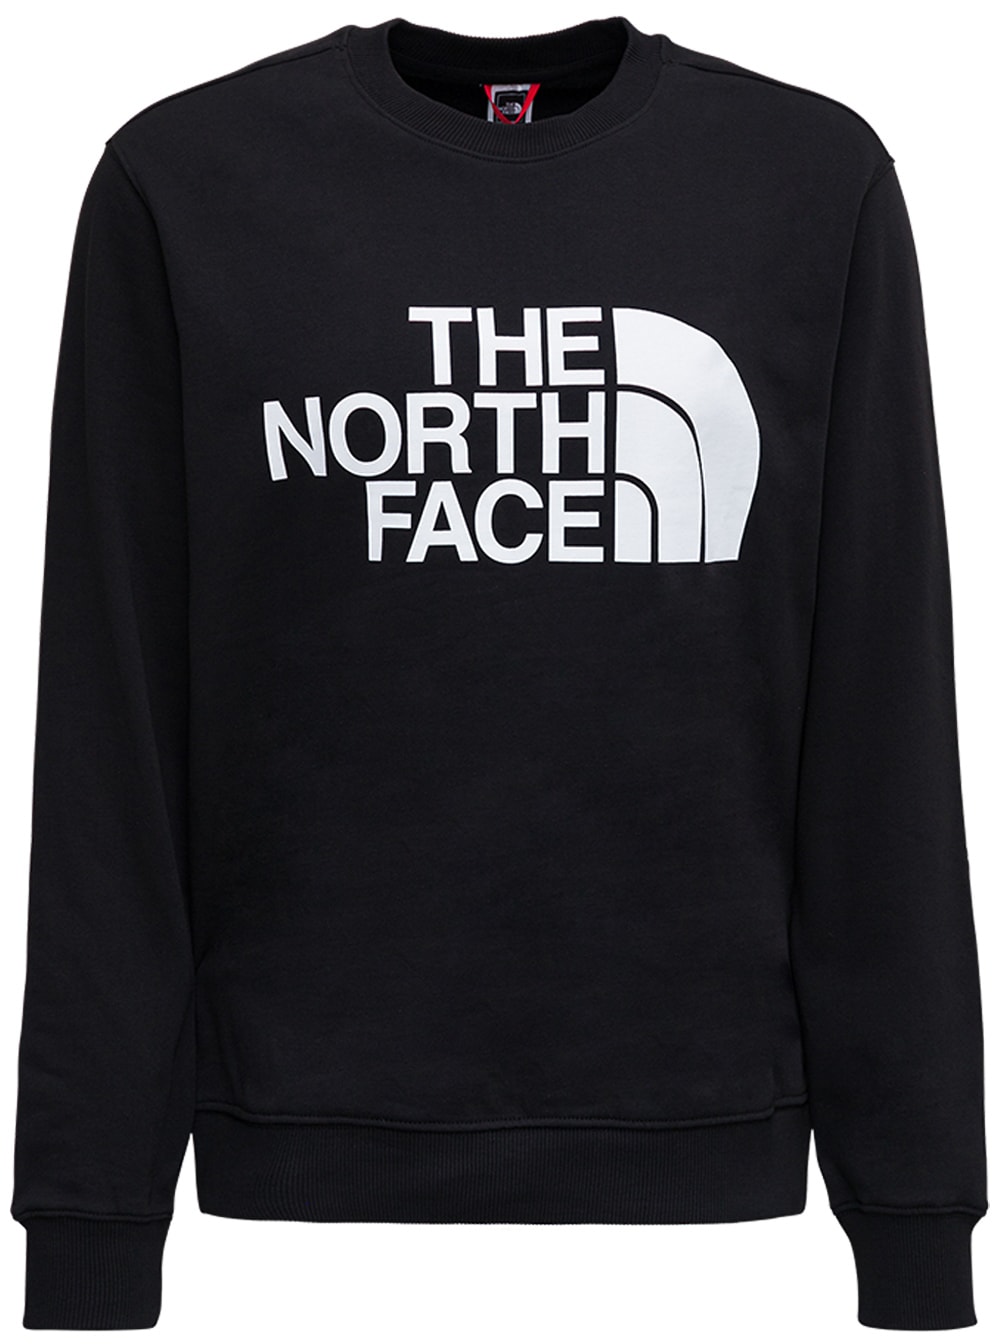 The North Face Black Cotton Sweatshirt With Logo Print